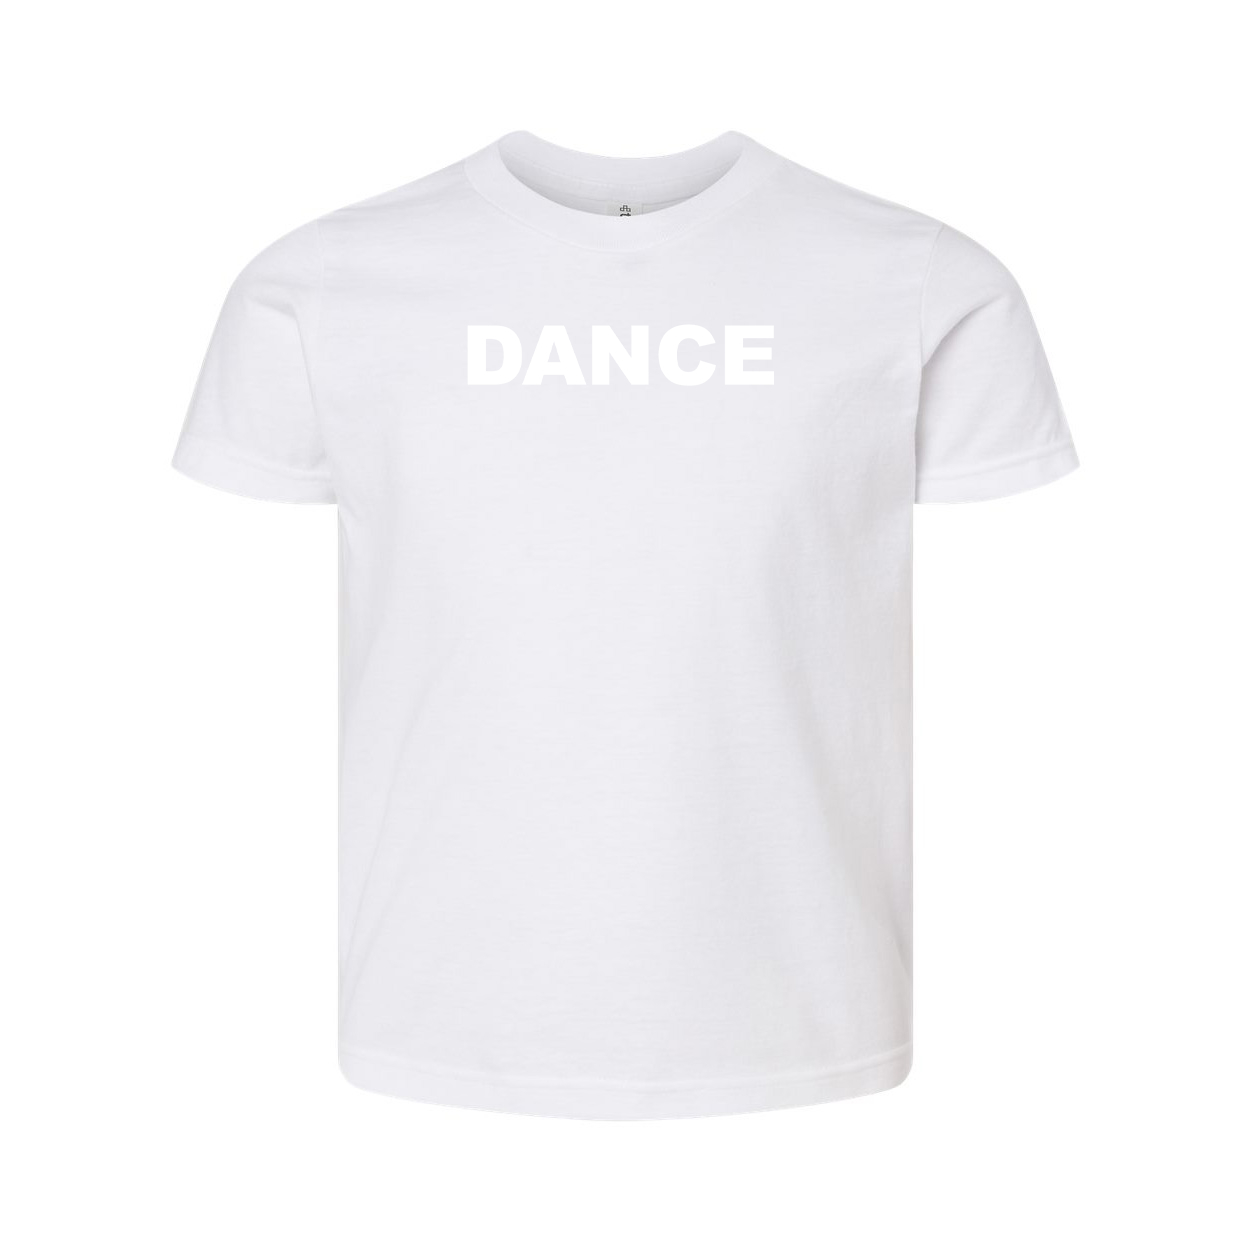 Dance Brand Logo Classic Youth T-Shirt White